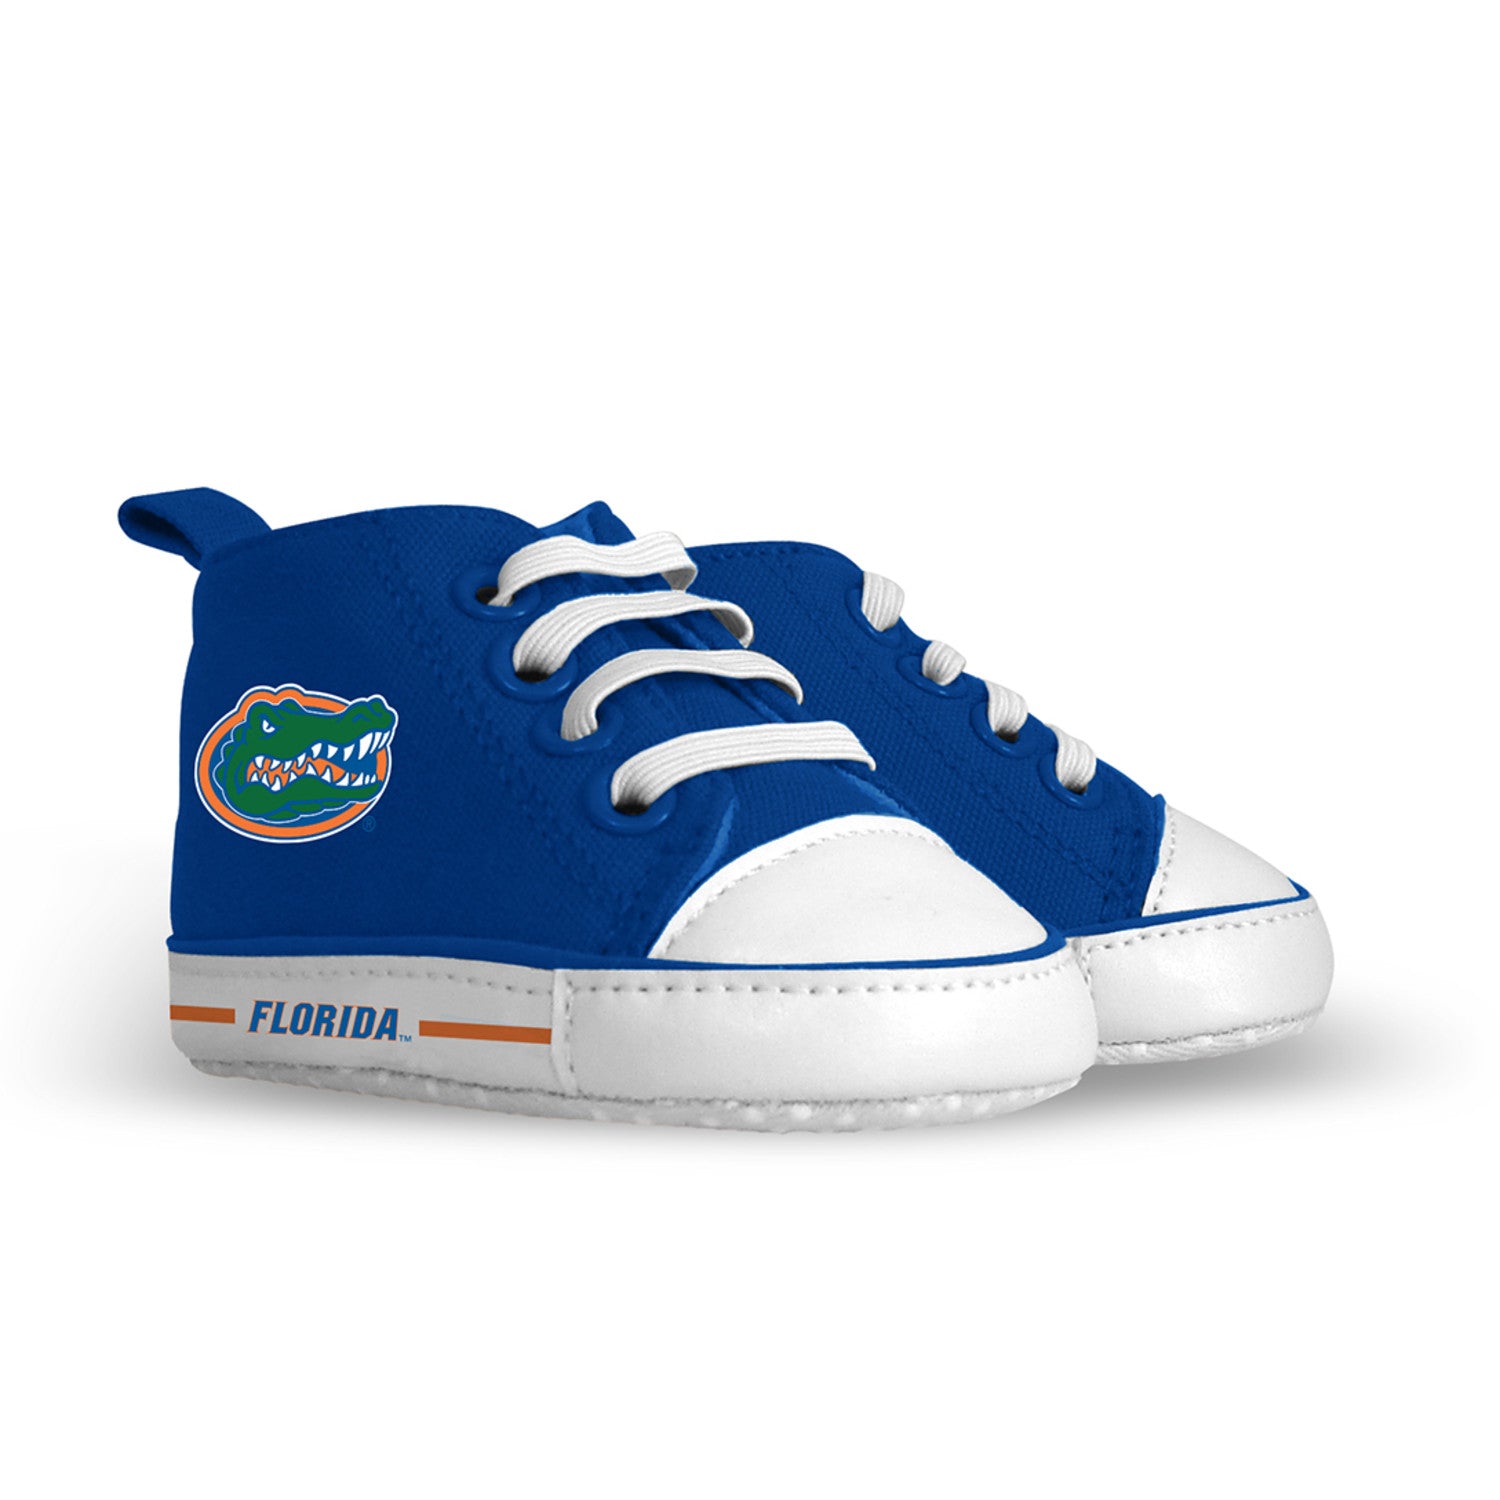 Florida Gators Baby Shoes